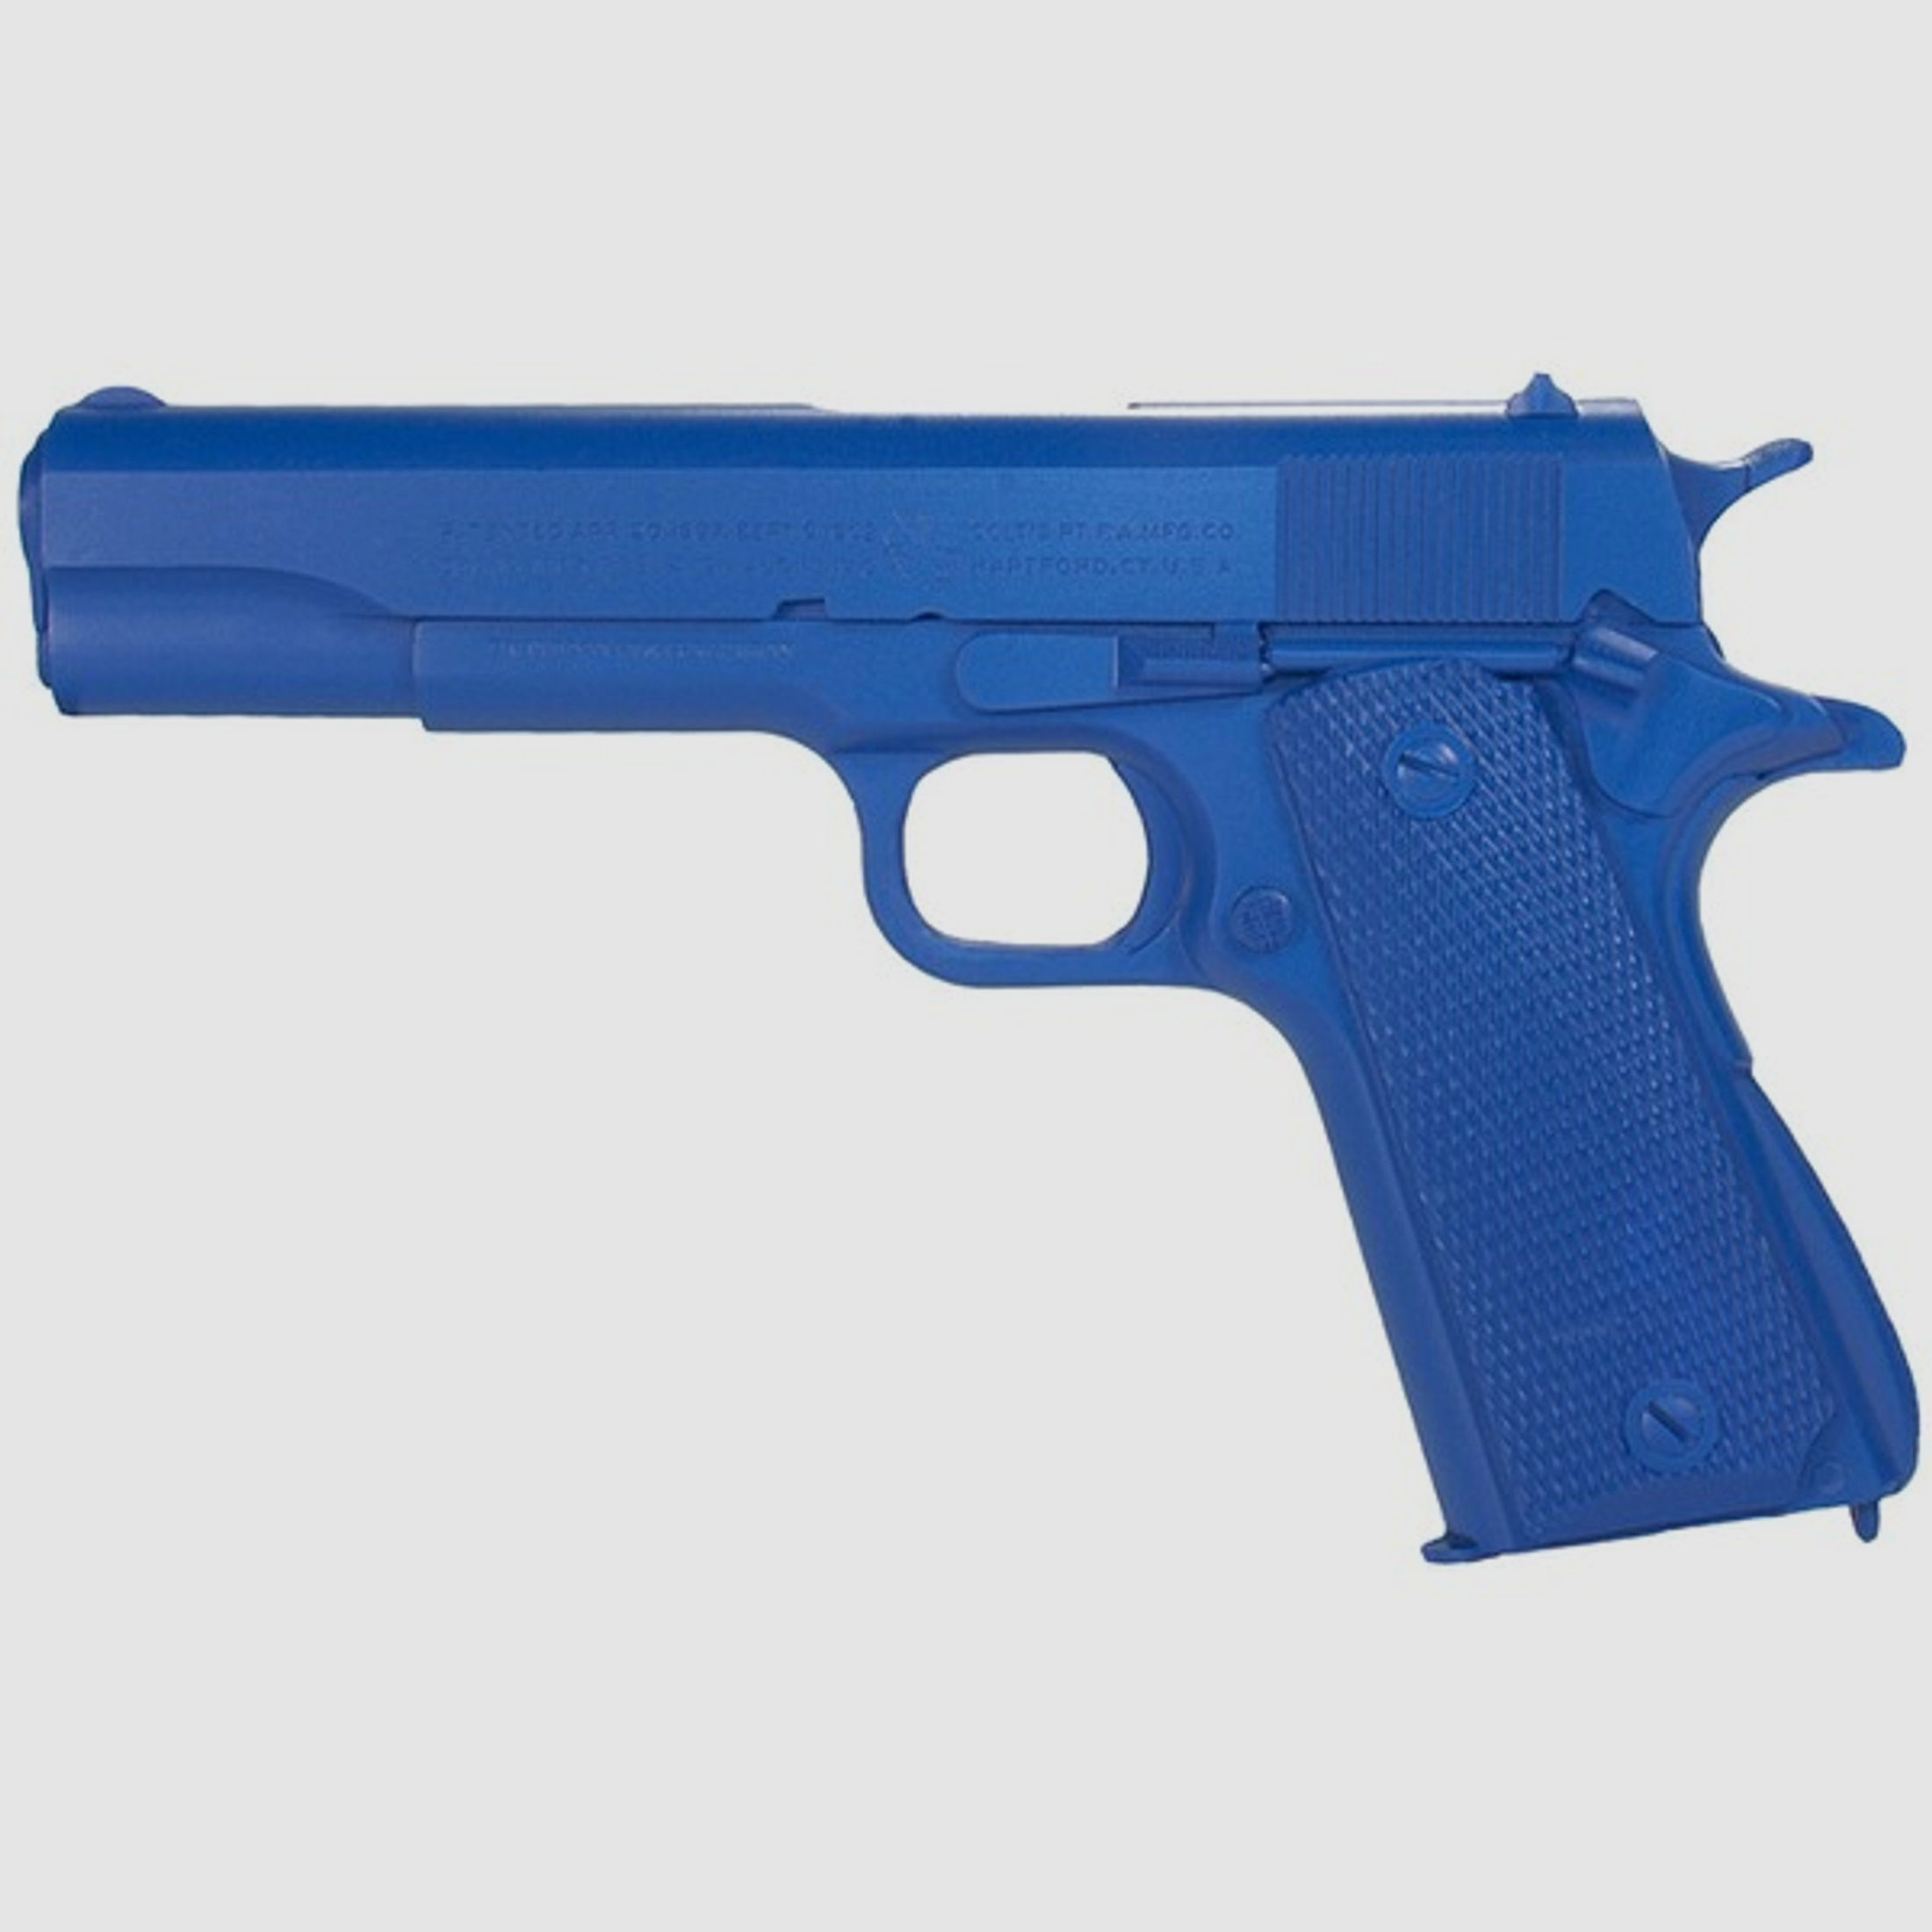 Trainingspist. Blue Guns Colt 1911